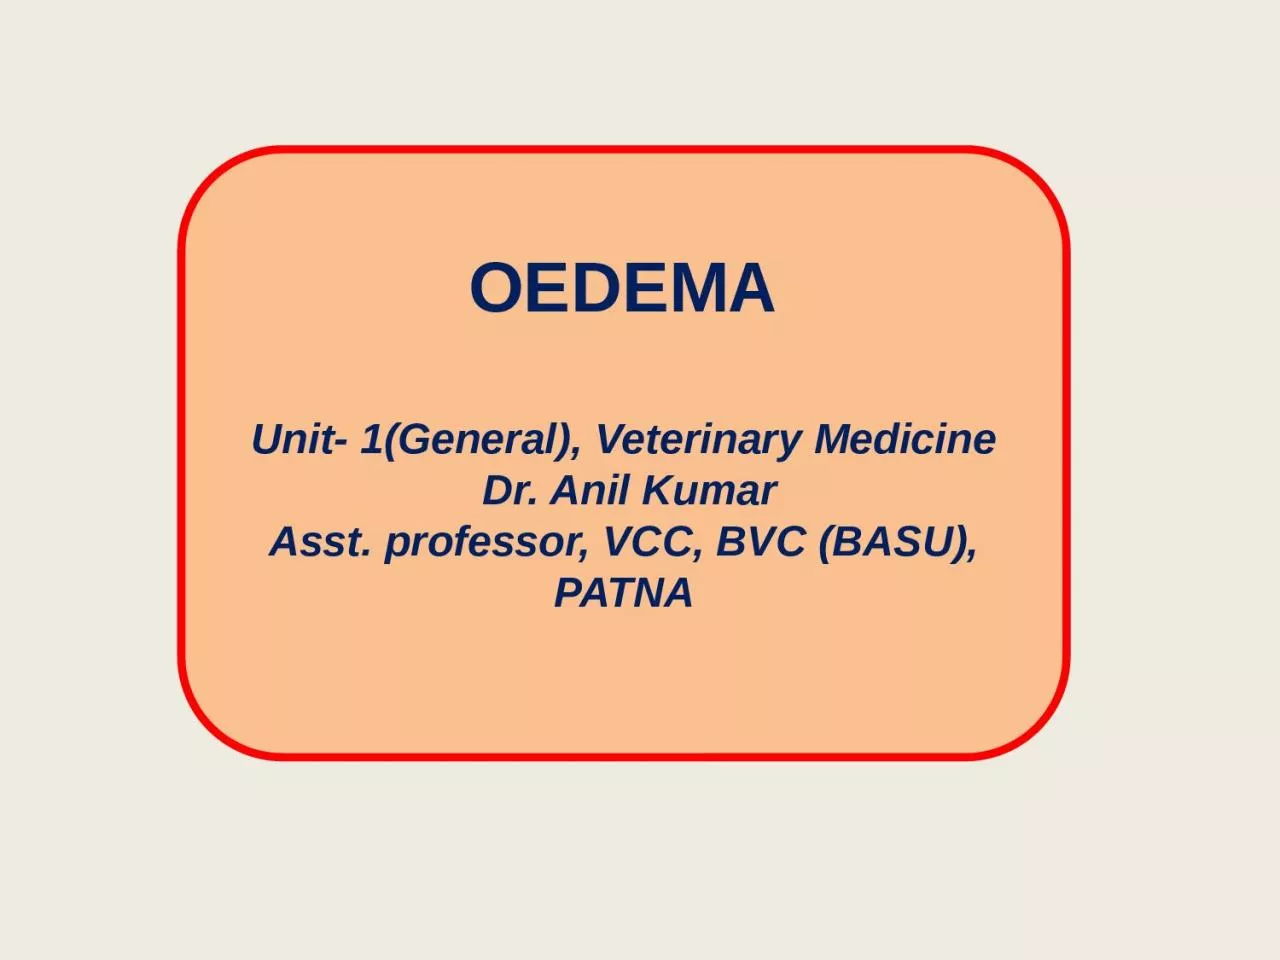 OEDEMA Unit- 1(General), Veterinary Medicine